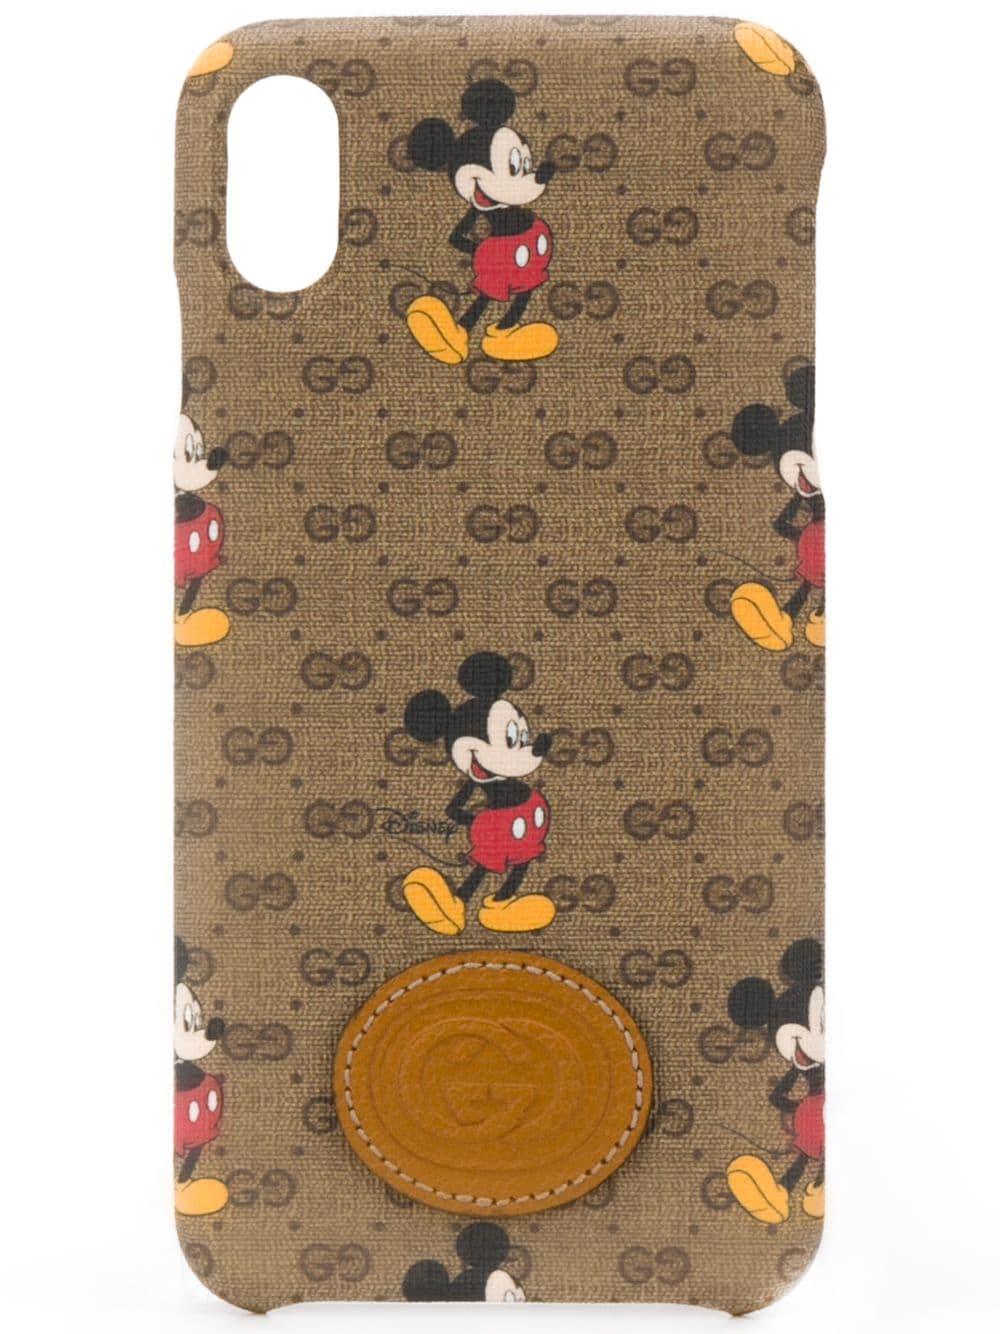 Mickey Gucci iPhone 14 Pro Case